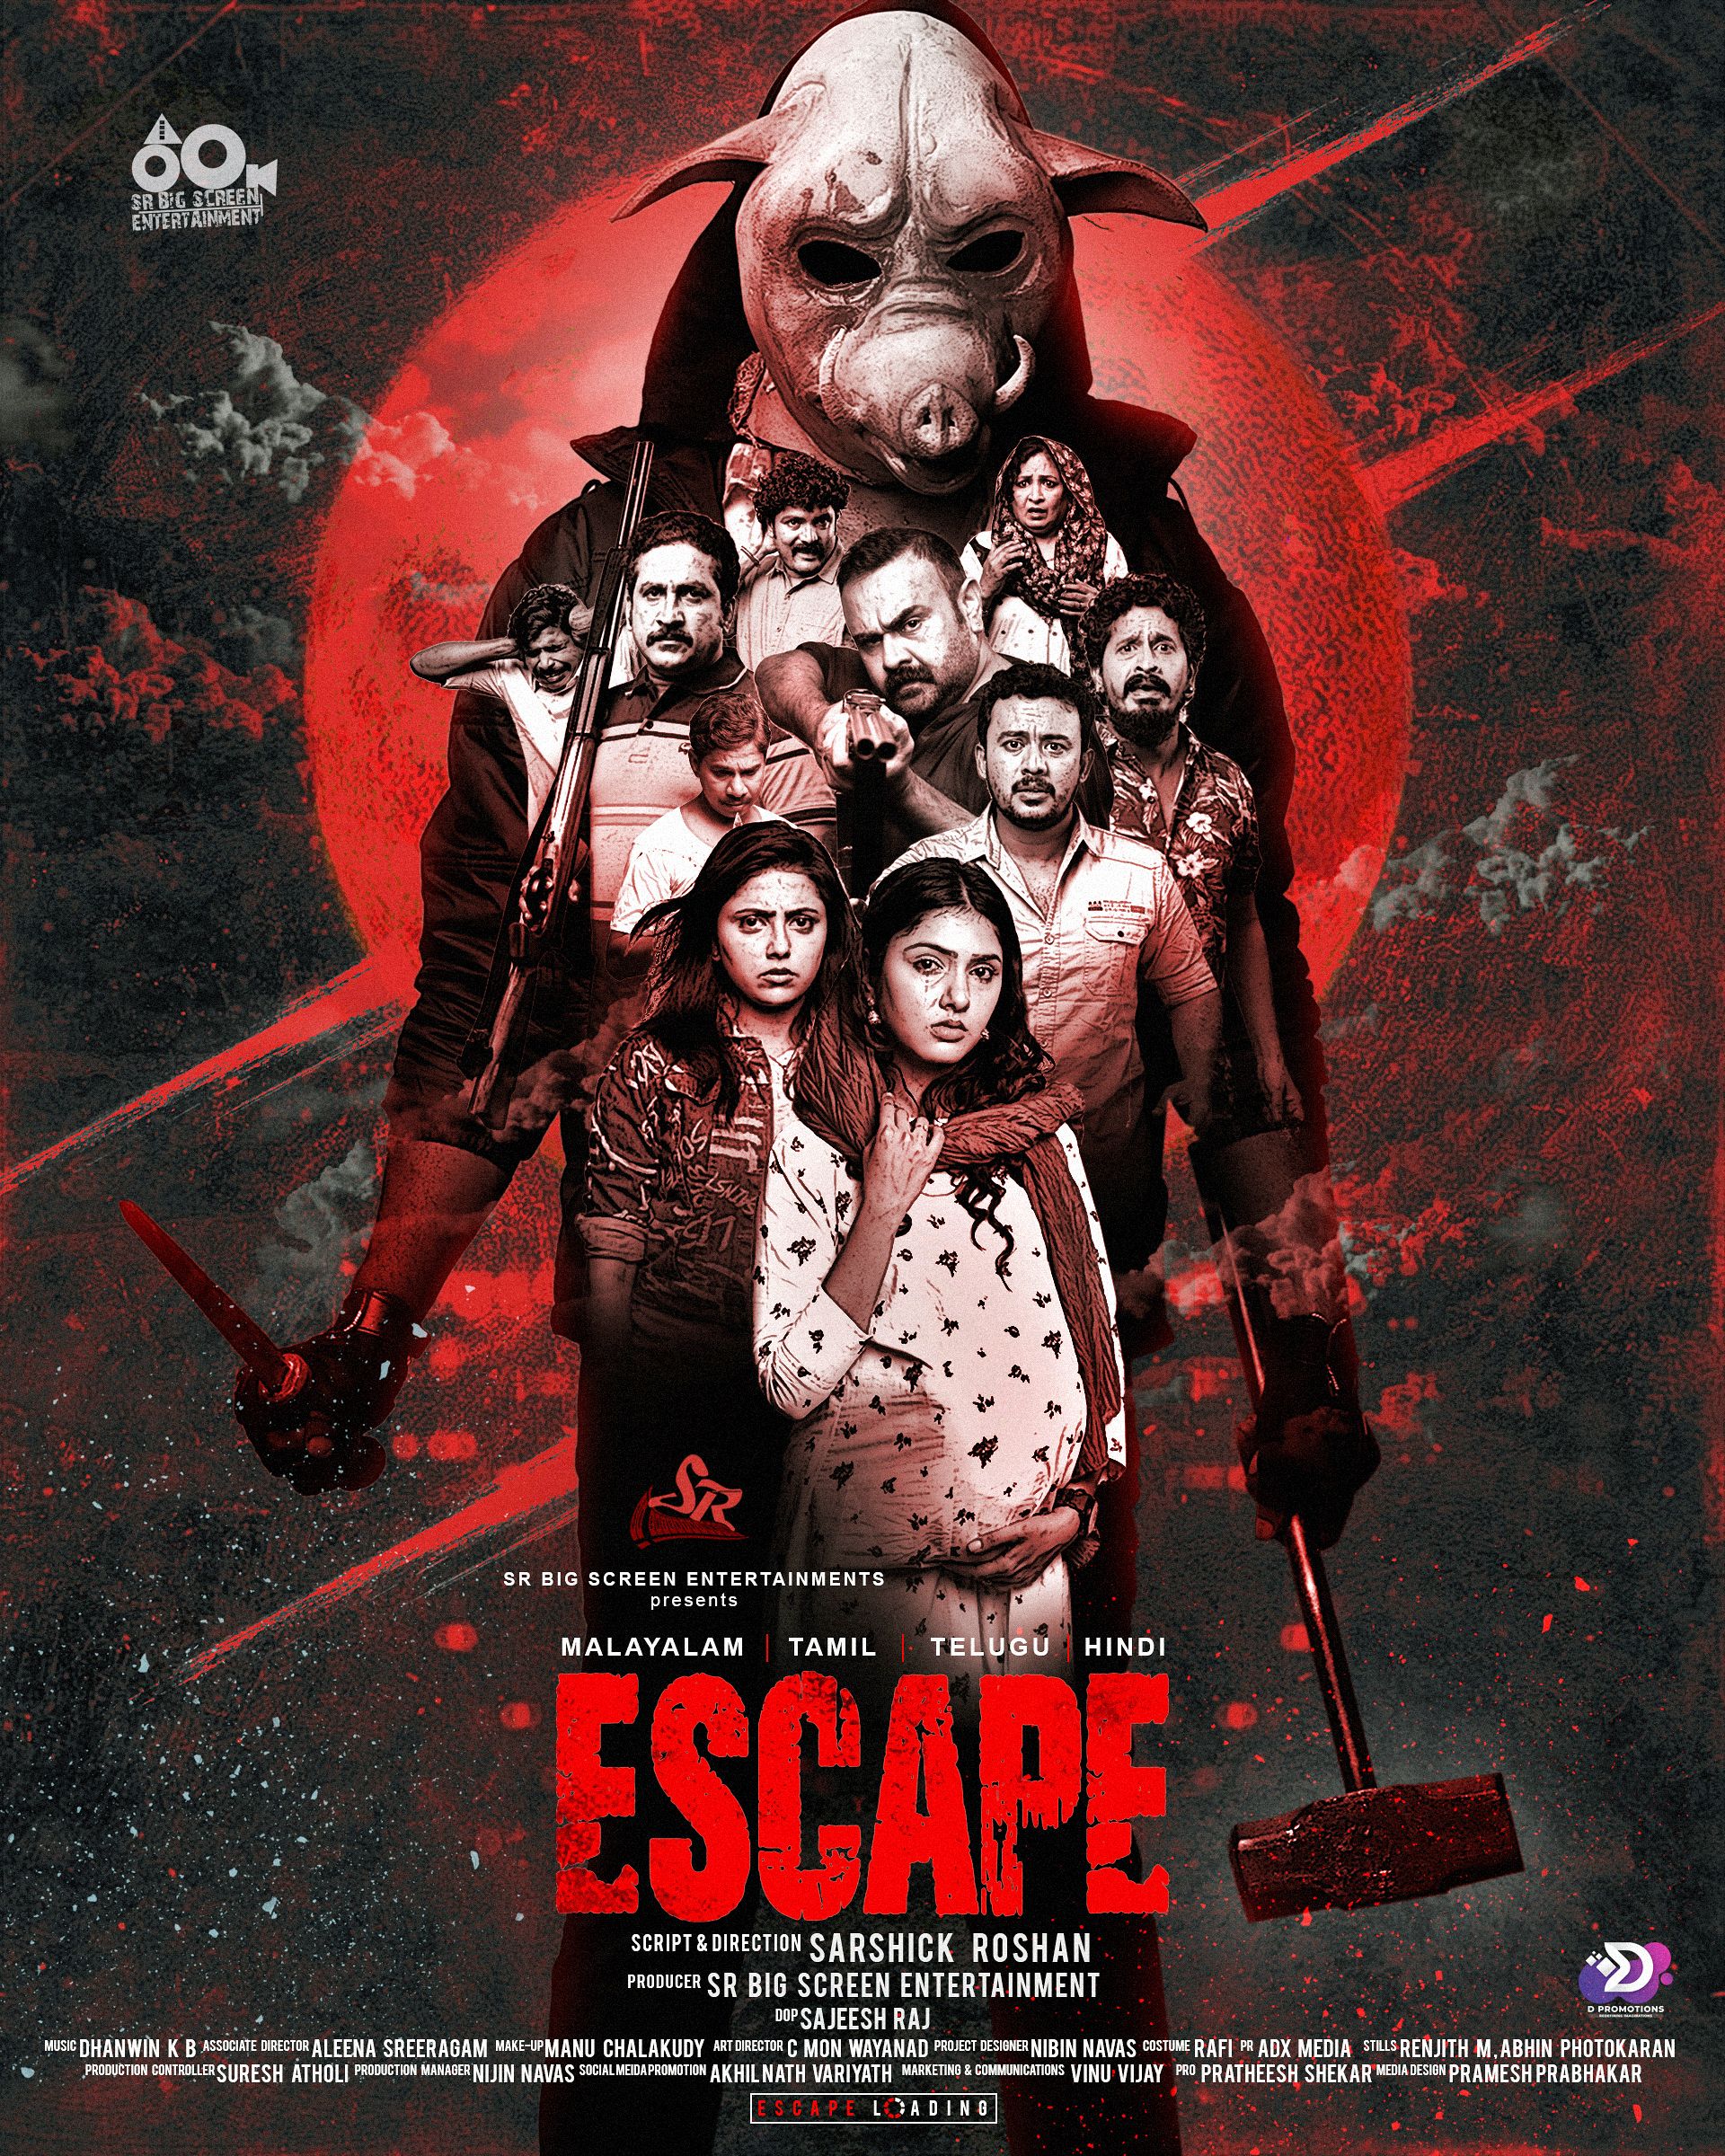 Golden Escape (2022) Telugu Dubbed (Unofficial) CAMRip download full movie